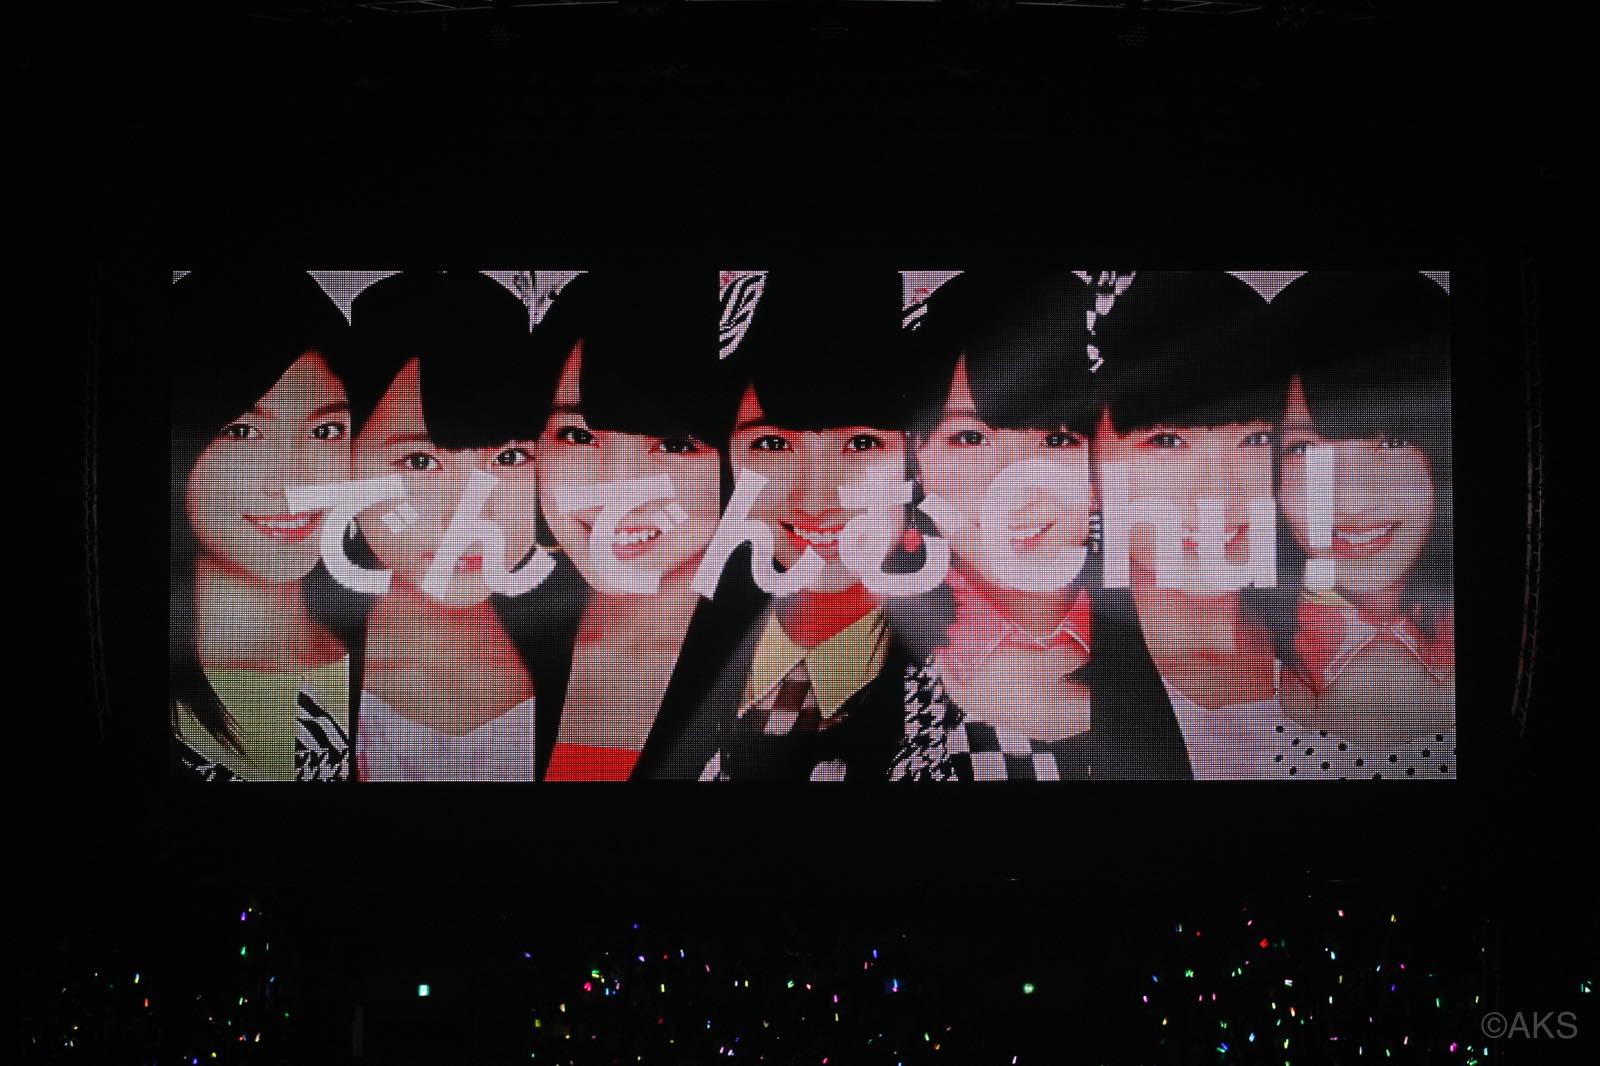 New Unit Dendenmu Chu! Announced at AKB48 Young Member Concert in Saitama Super Arena!